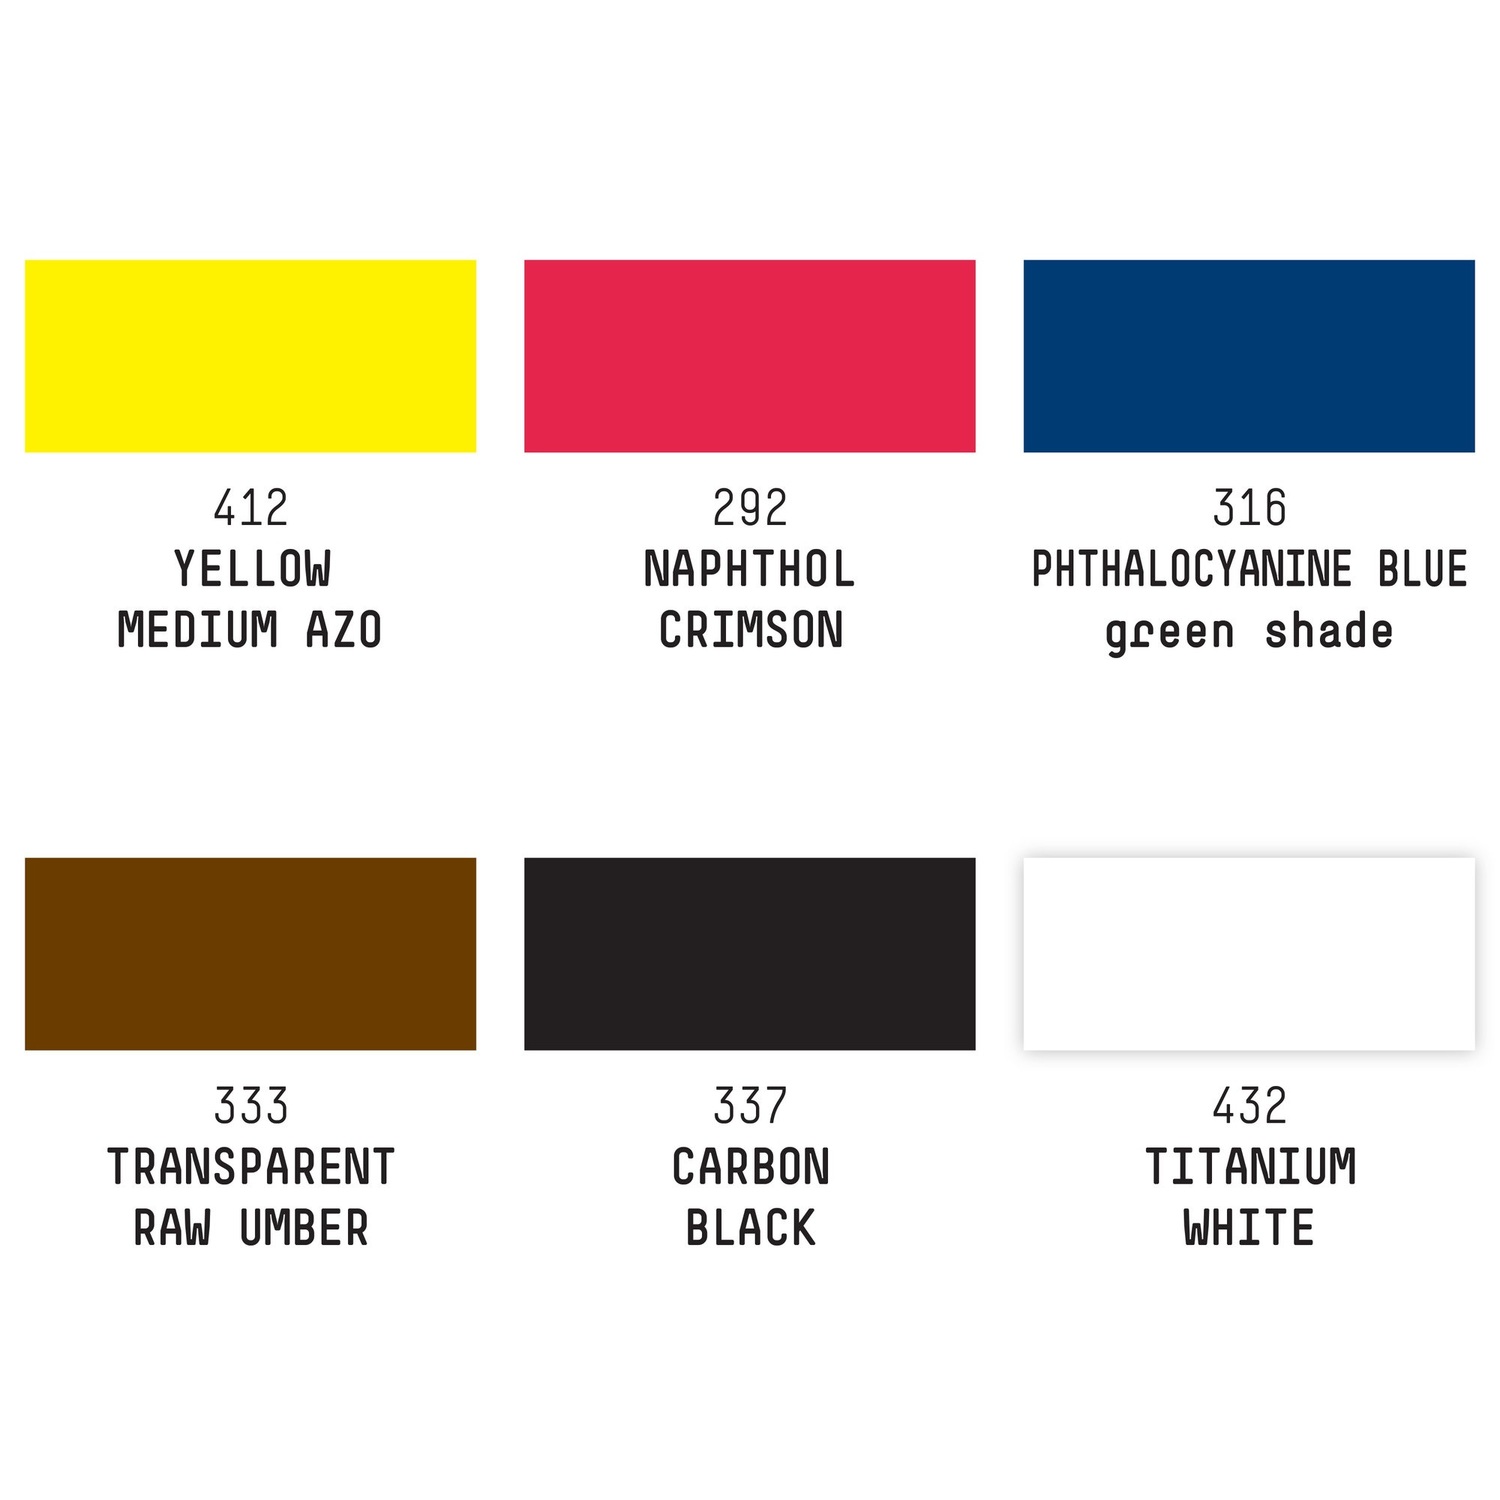  Ink flüssige Acrylfarbe Set Basics 6x30ml